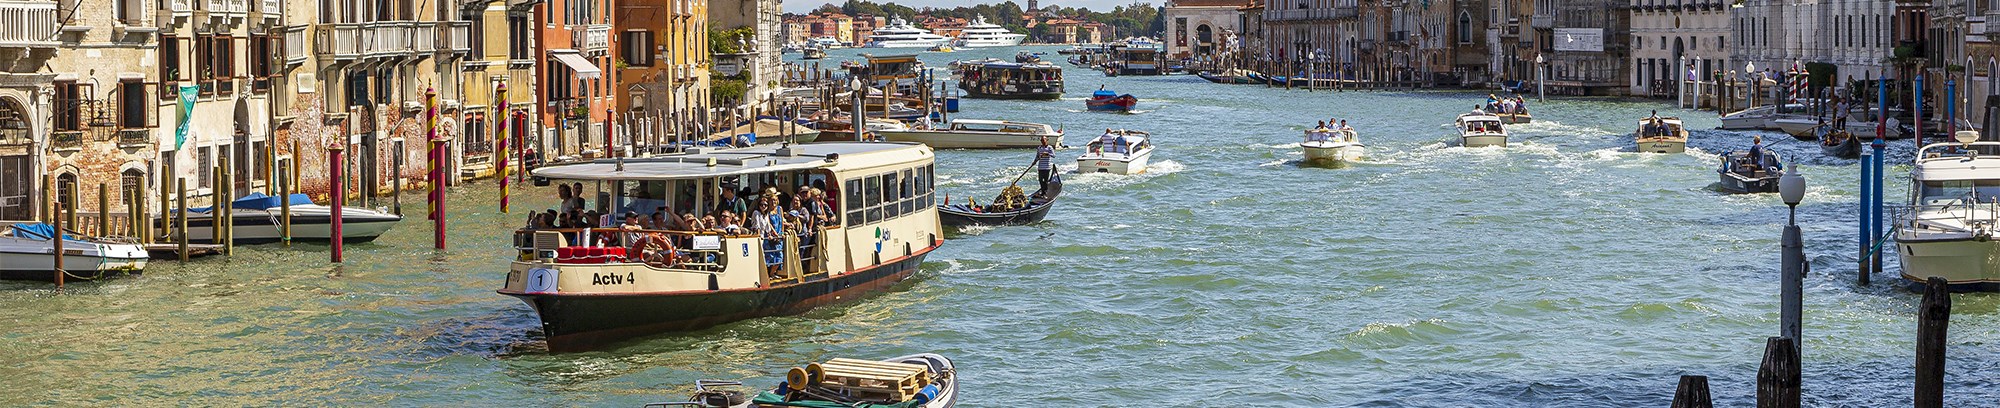 Grand Canal i Venedig i Italien